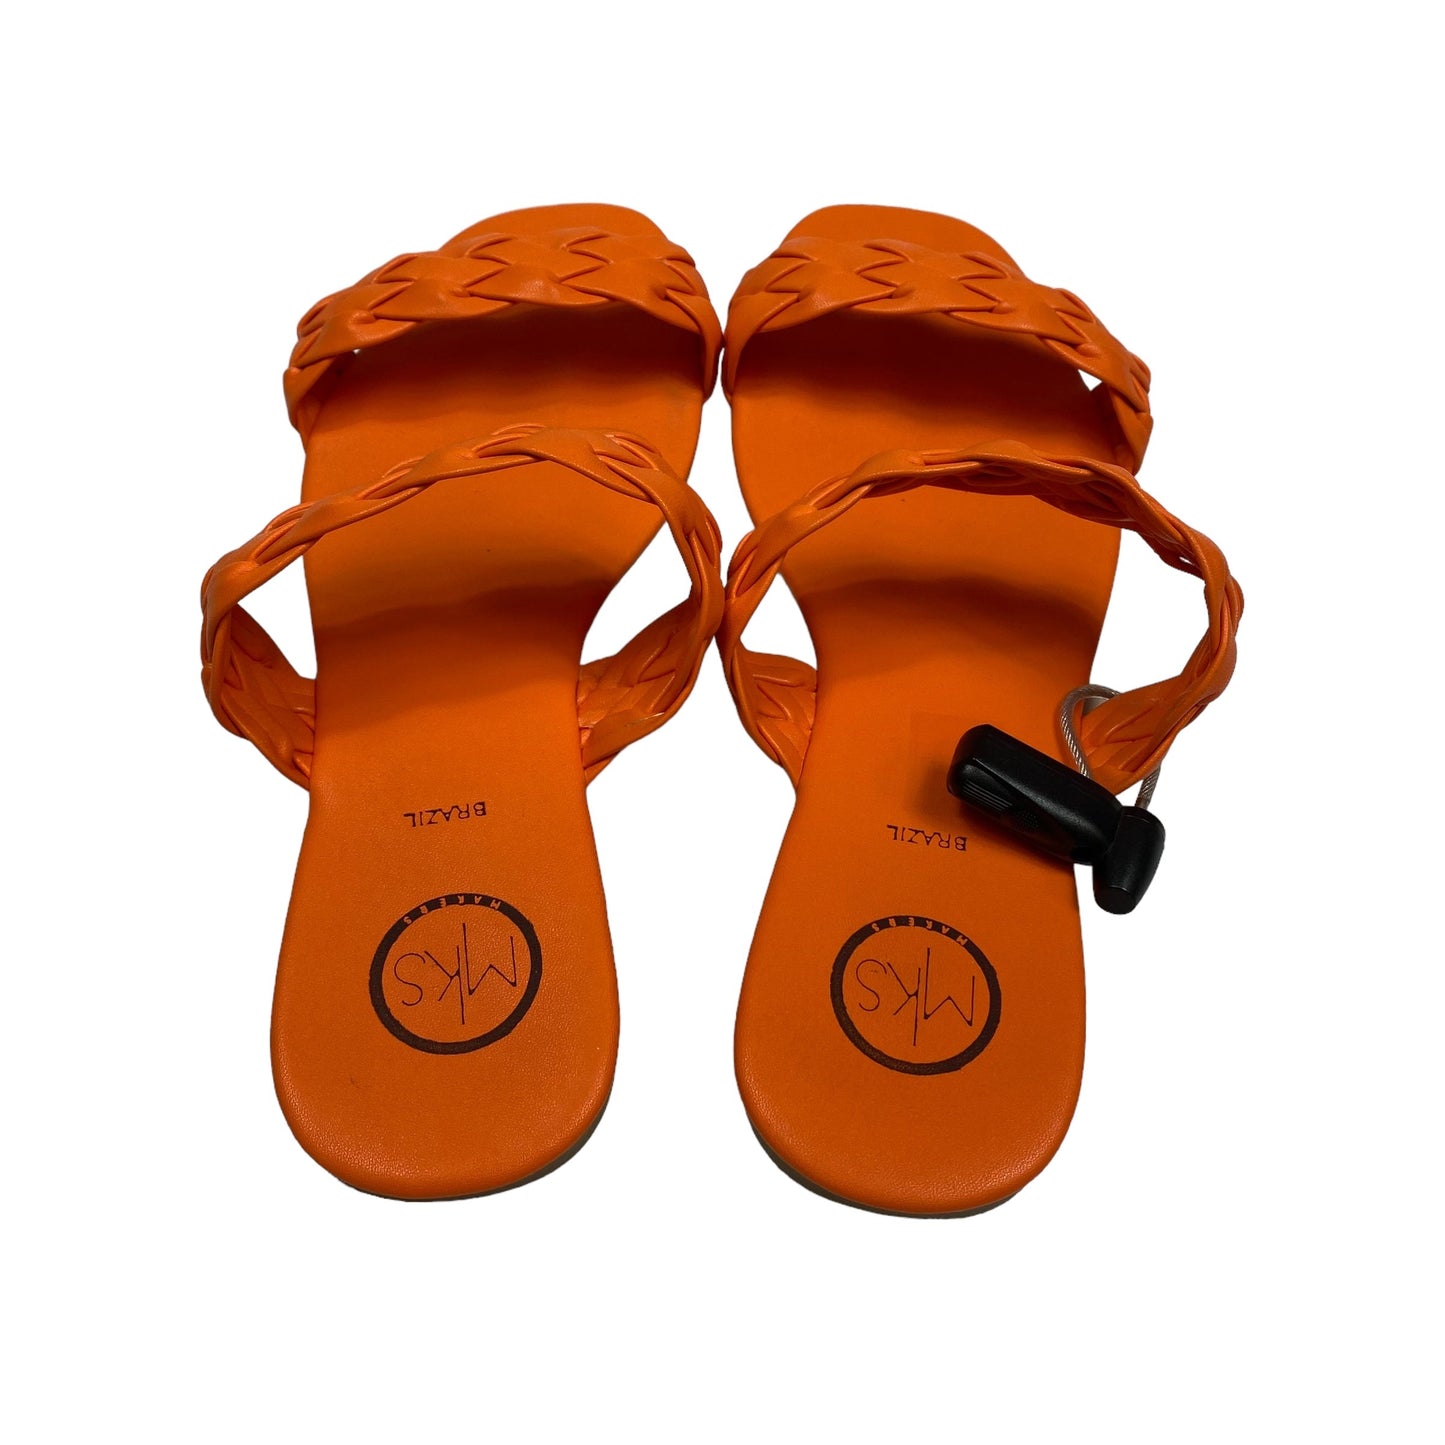 Orange Shoes Flats Makers, Size 8.5